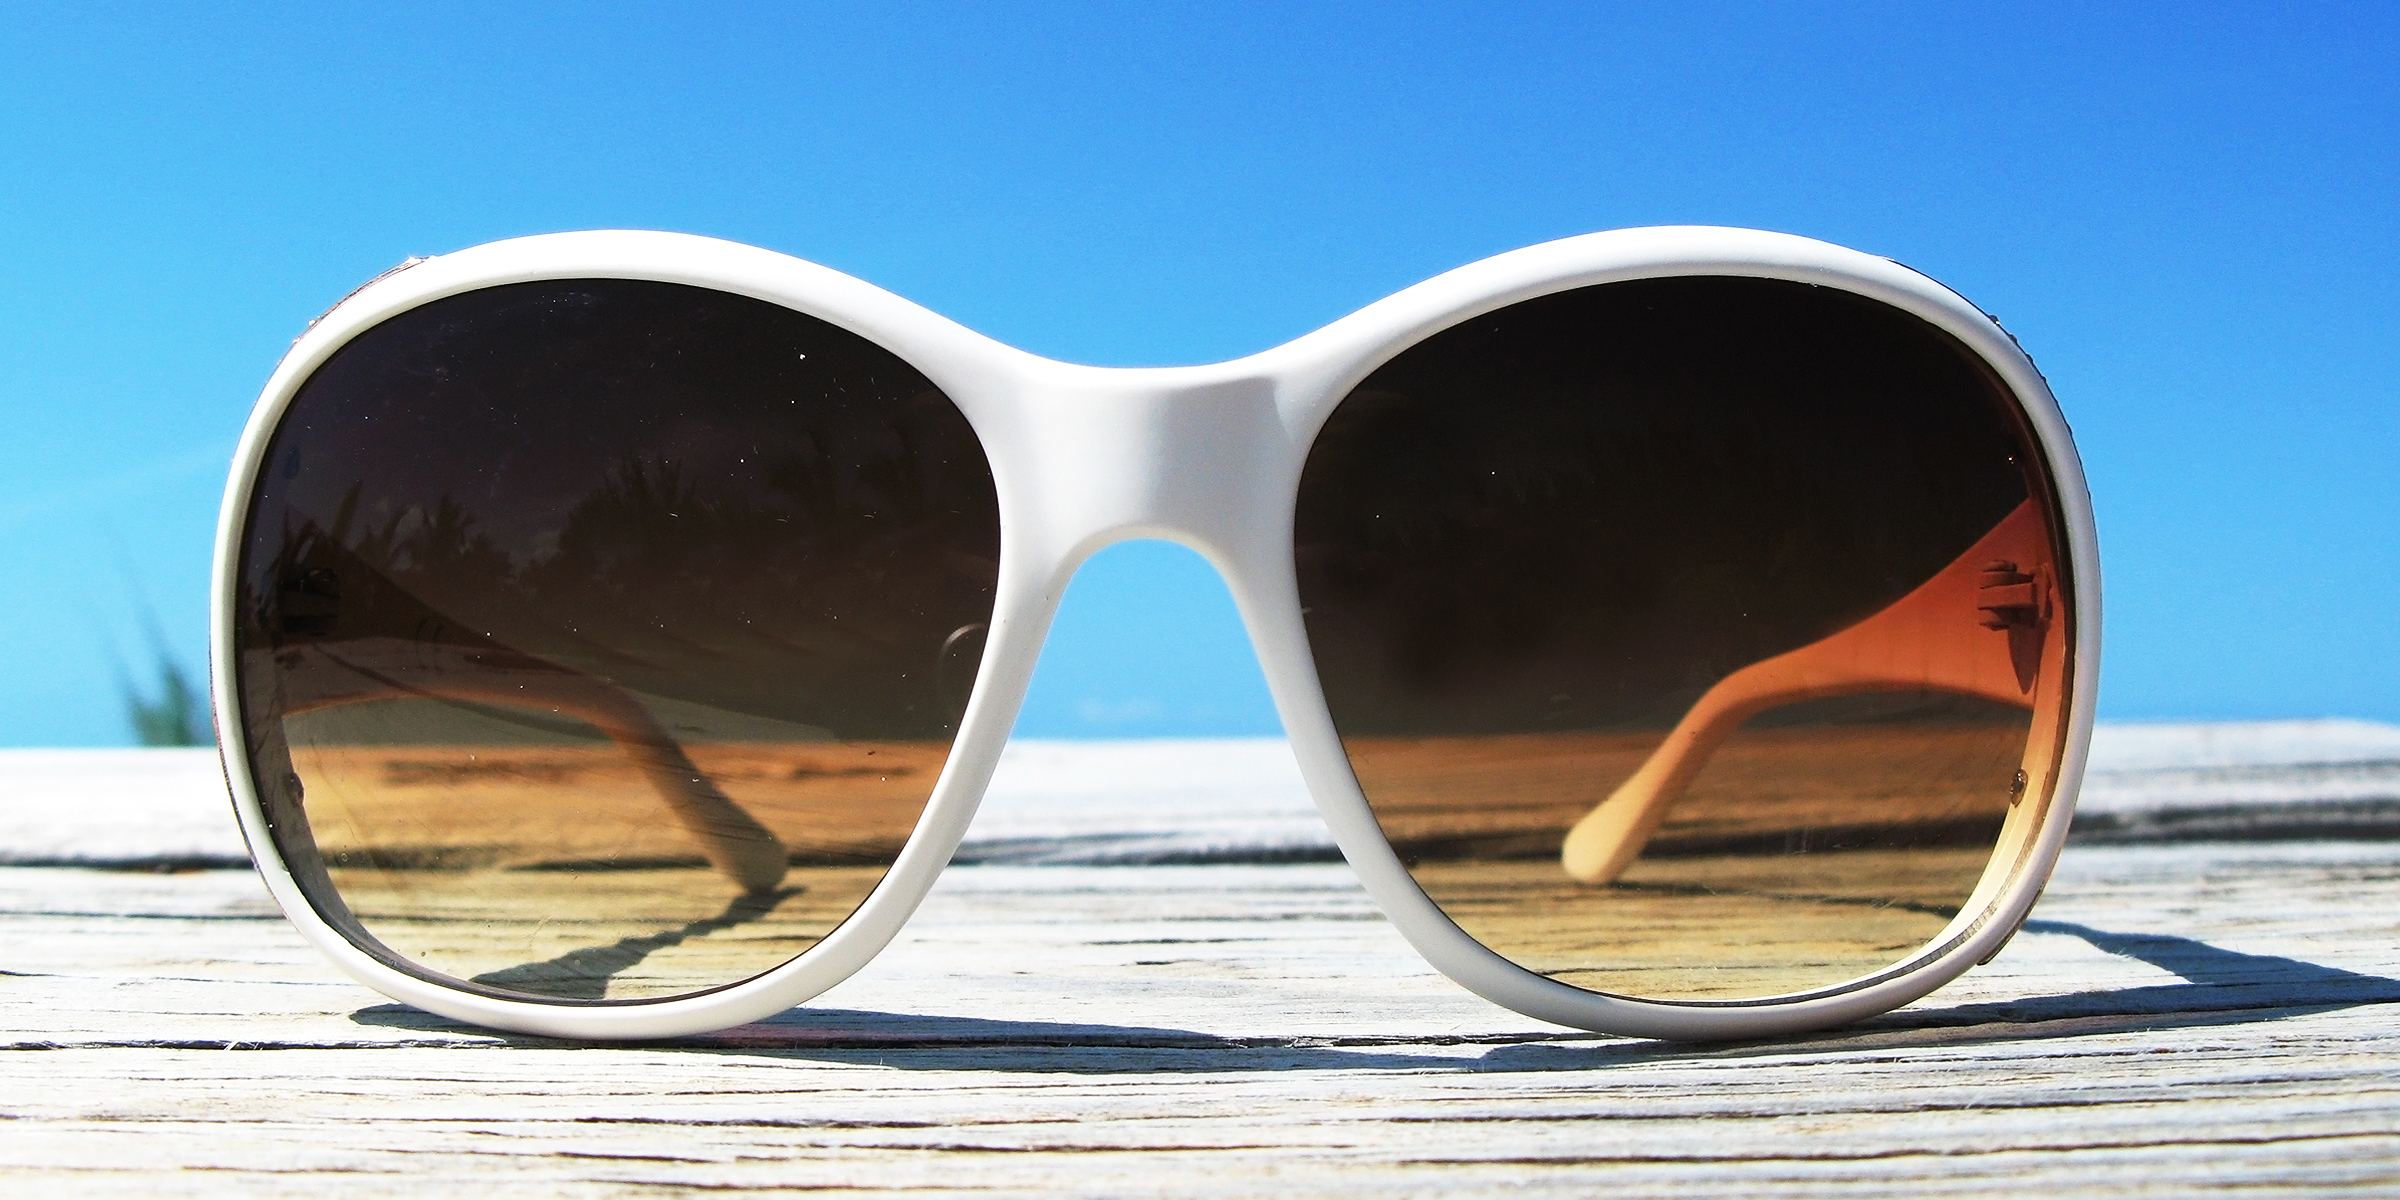 A close-up shot of sunglasses | Source: Shutterstock